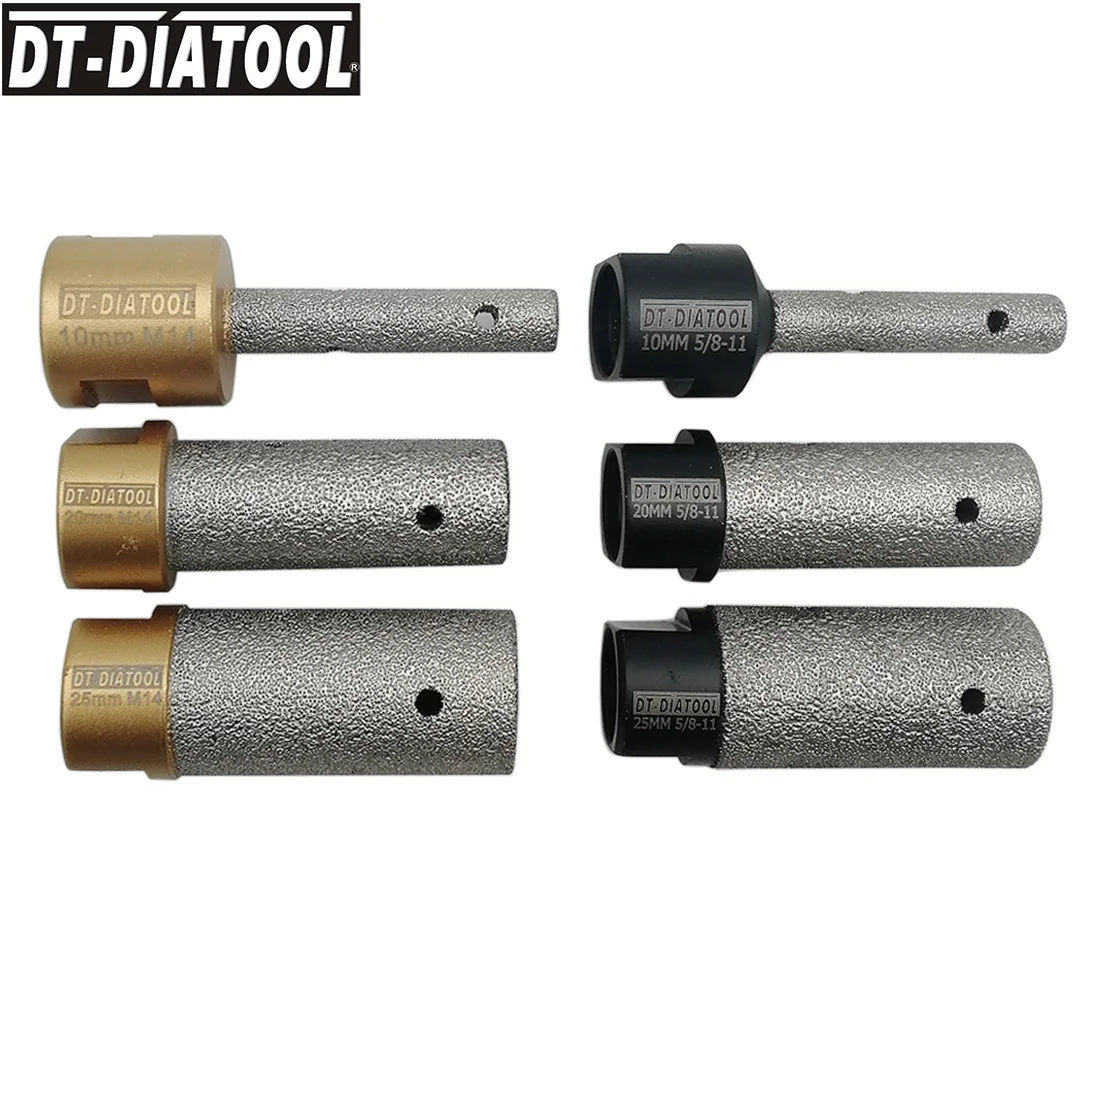 

DT-DIATOOL 1pc Dia 10/20/25mm Vacuum Brazed Diamond Finger Bits 5/8-11 or M14 Thread Milling Bits for Porcelain Marble Granite